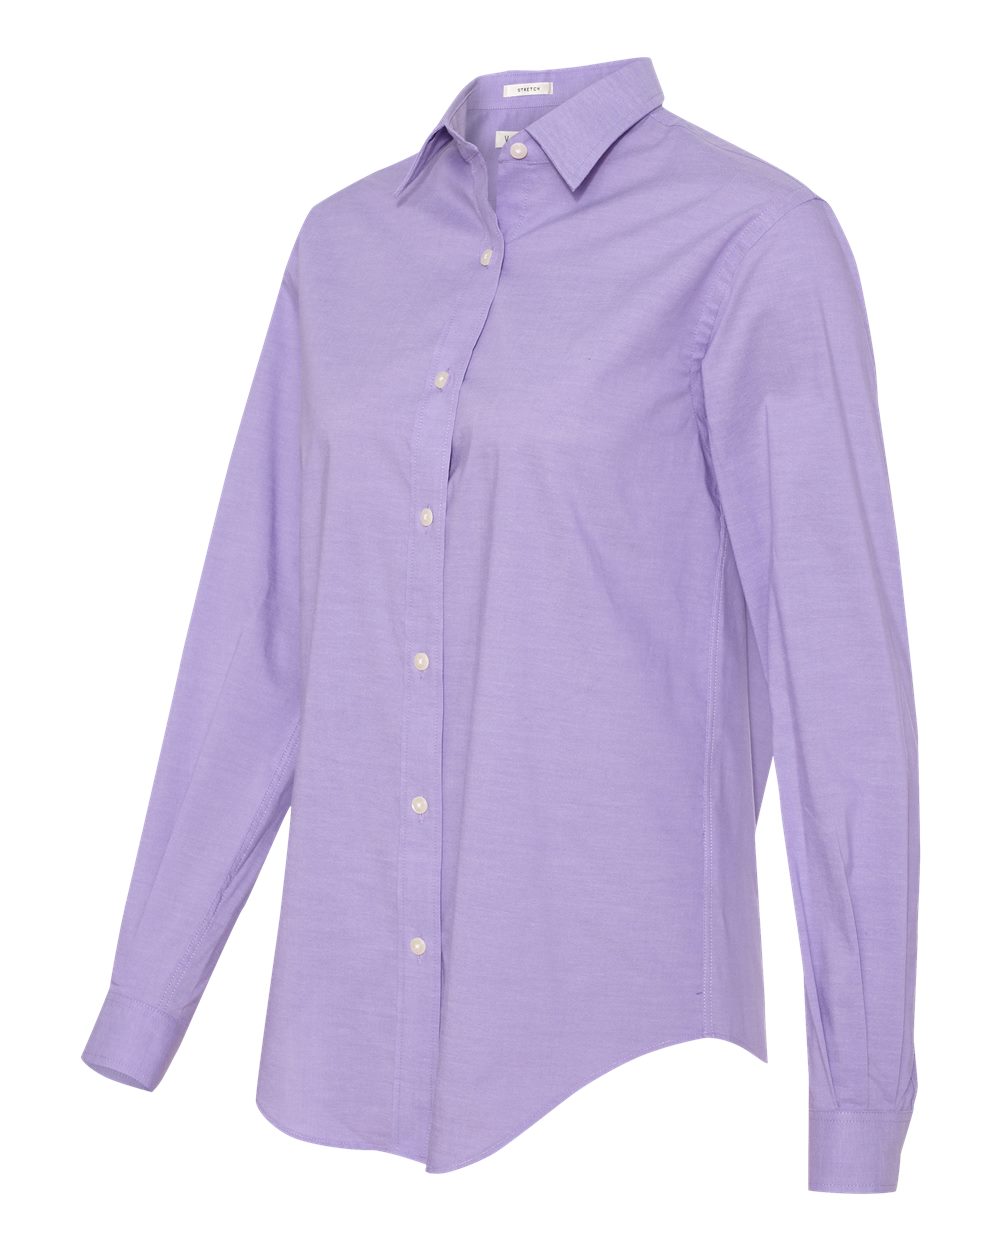 Van Heusen 13V0238 Ladies' Stretch Pinpoint Spread Collar Shirt